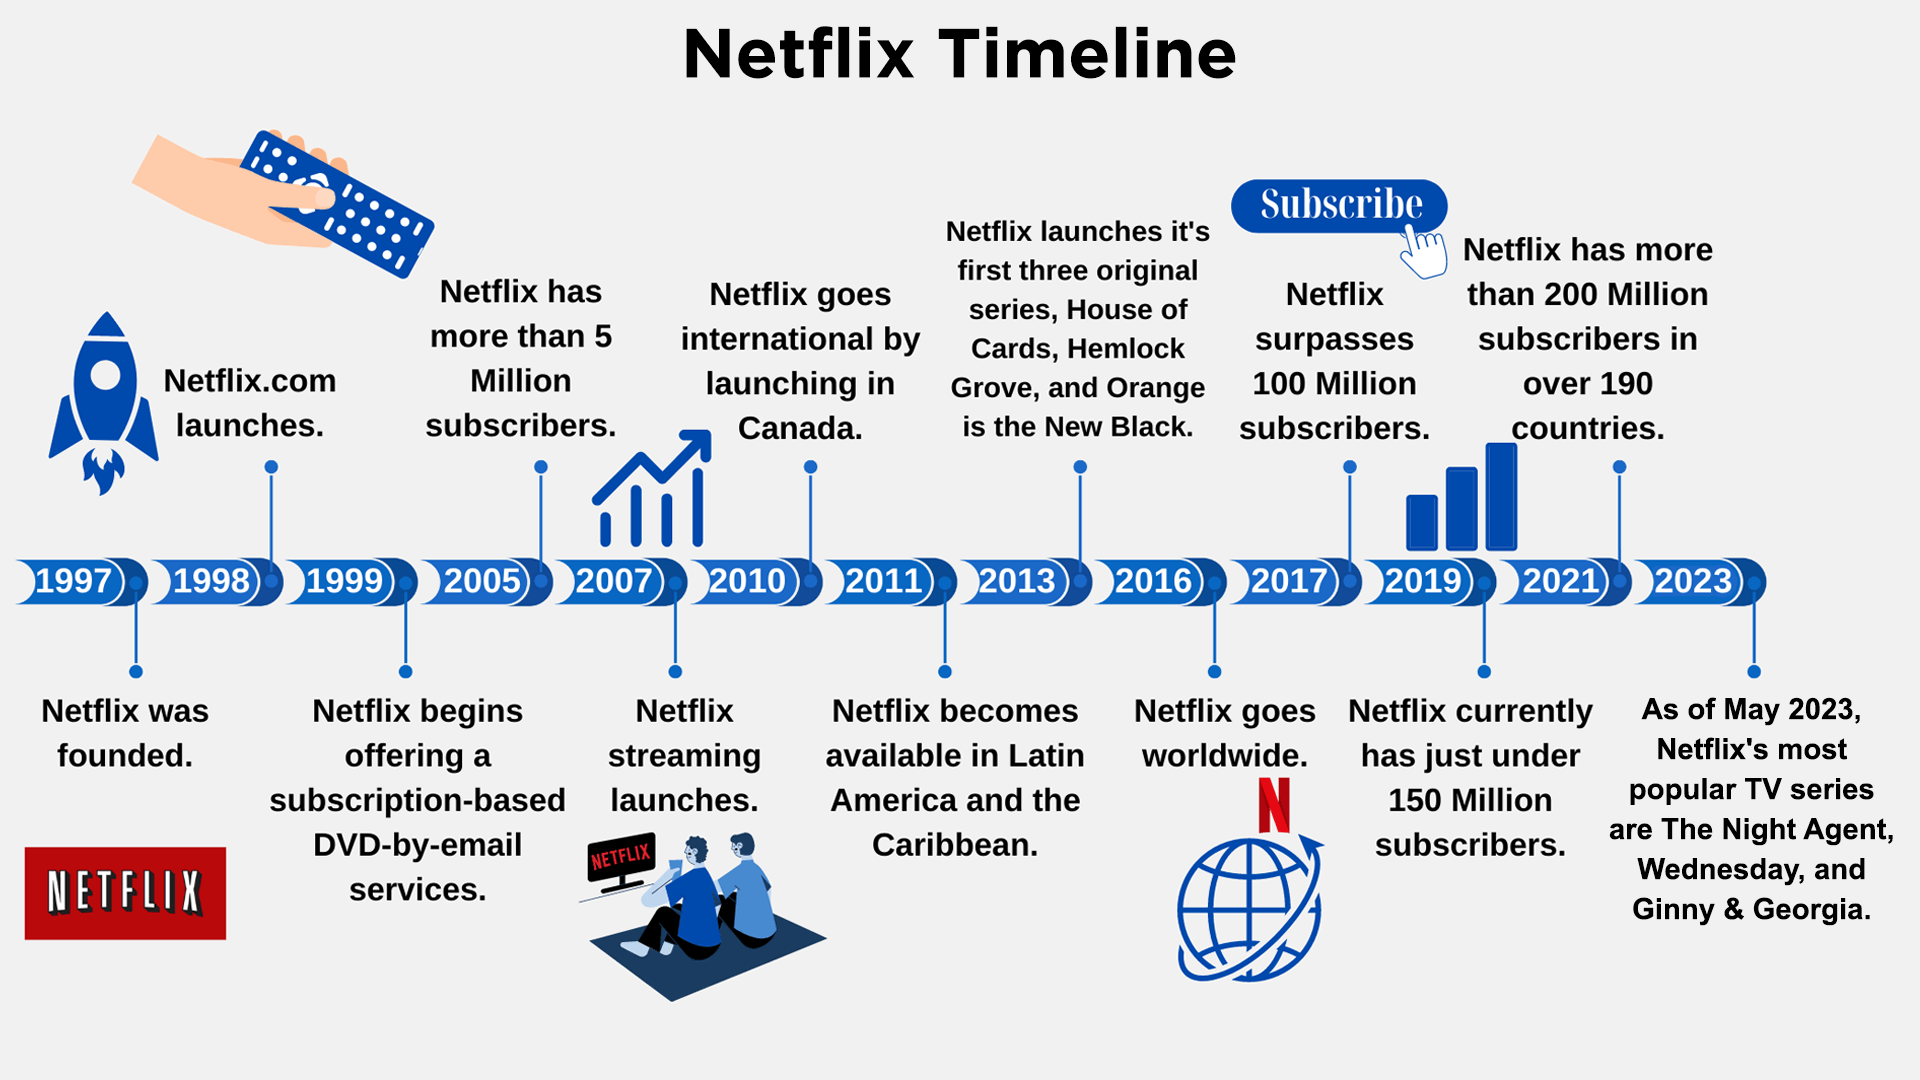 Netflix Timeline